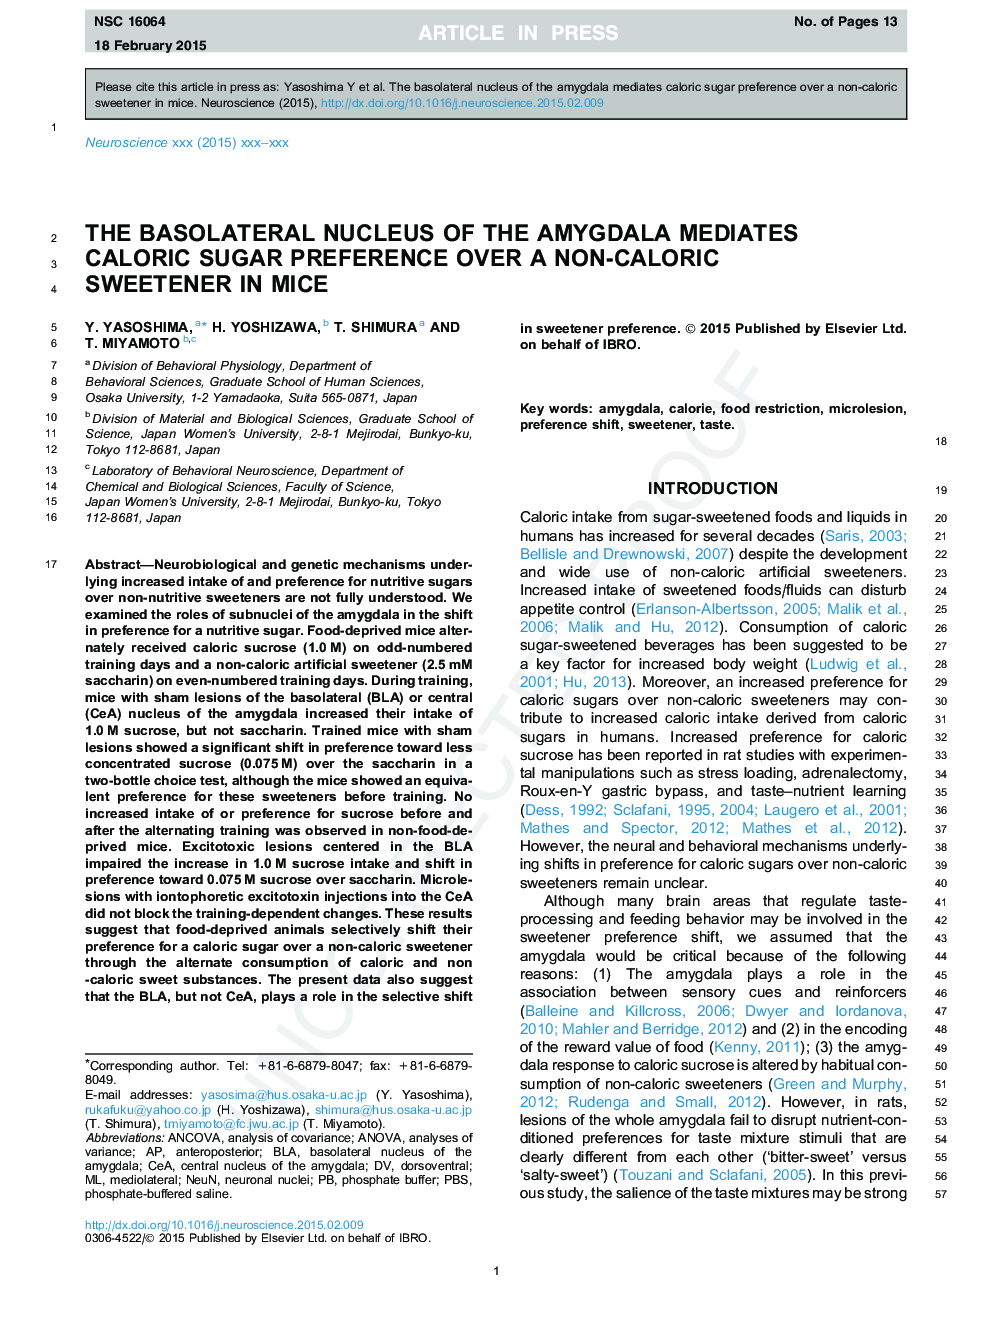 The basolateral nucleus of the amygdala mediates caloric sugar preference over a non-caloric sweetener in mice